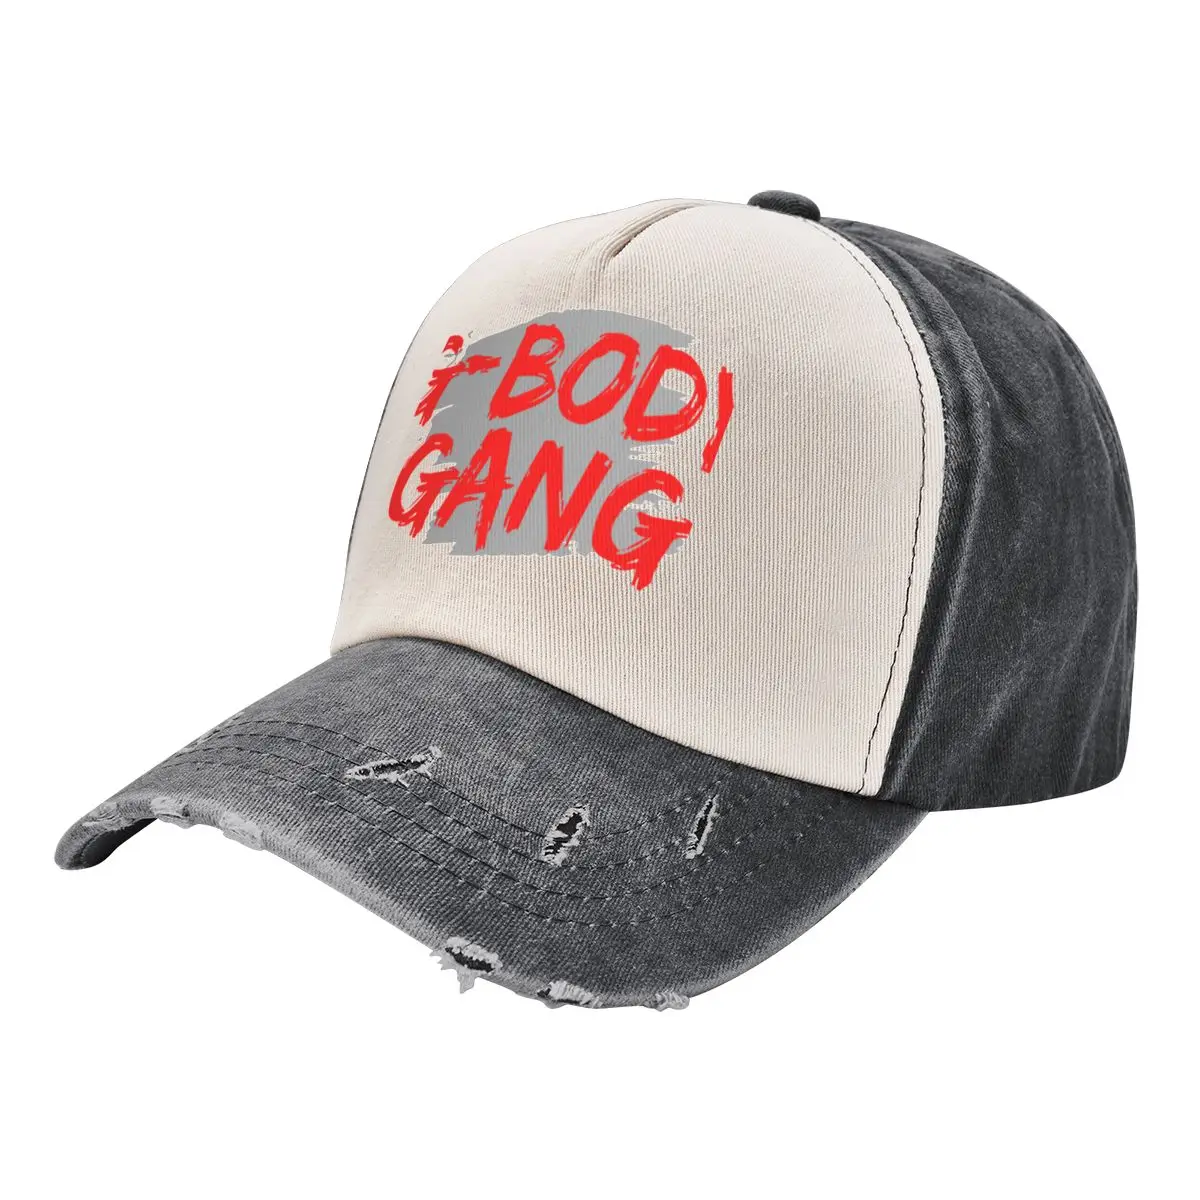 

G body gang Regal cutlass monte carlo Baseball Cap Hood Snapback Cap Caps For Men Women's